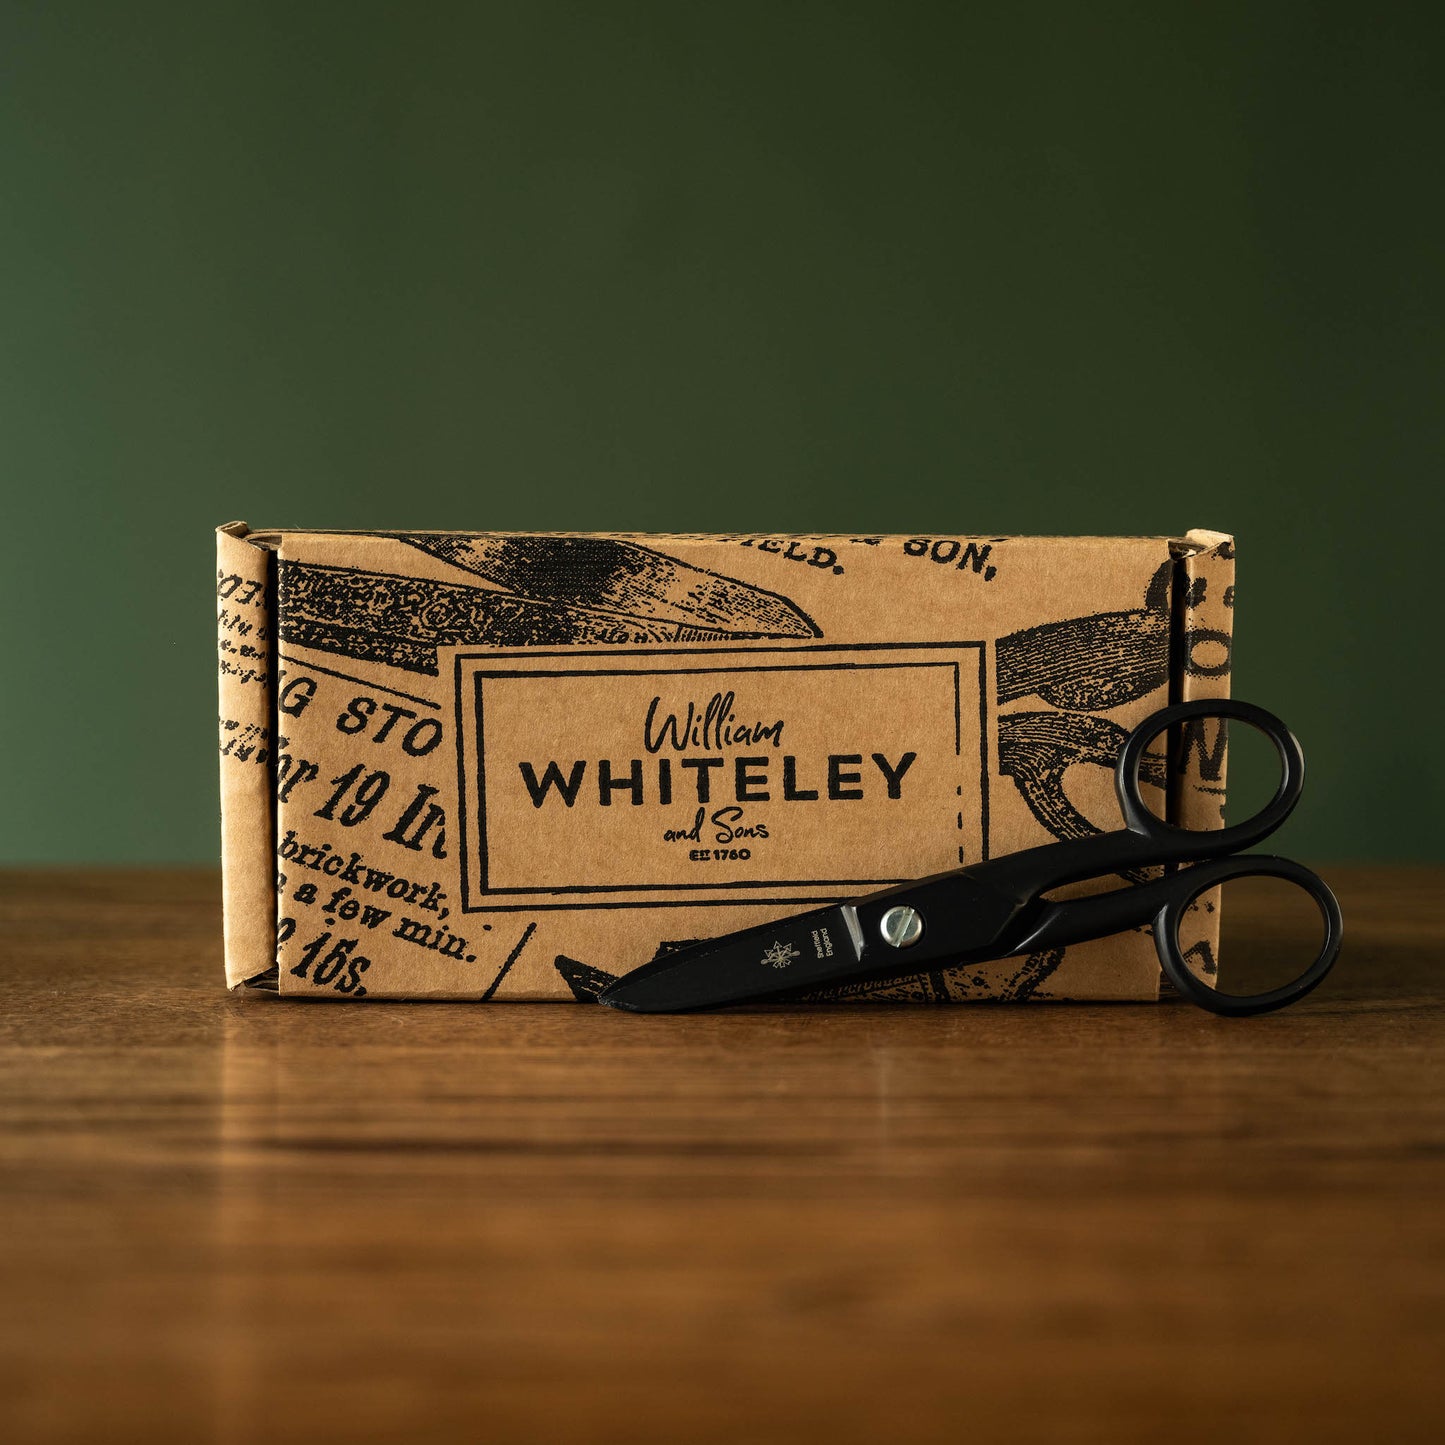 William Whiteley Black Electricians Snip Scissors & Presentation Box